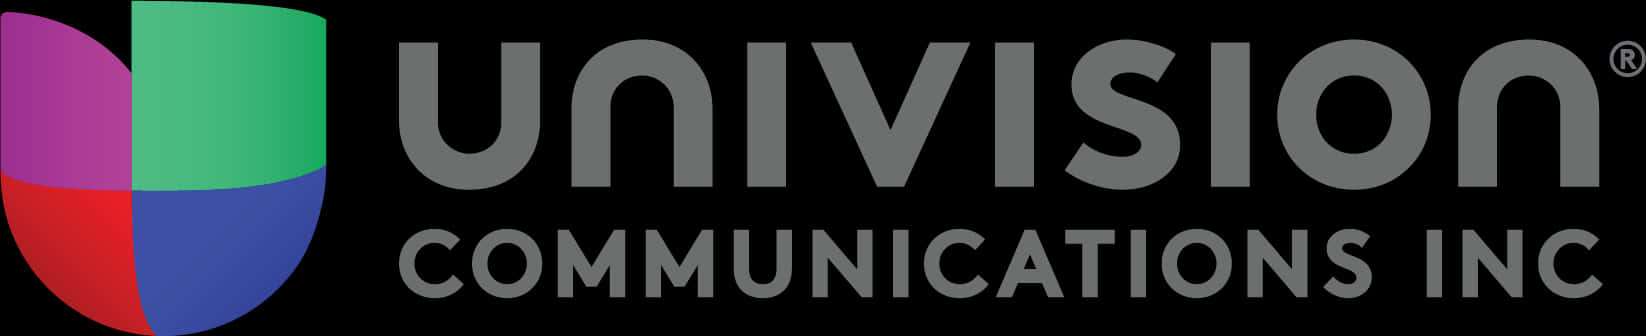 Univision Communications Inc Logo PNG image